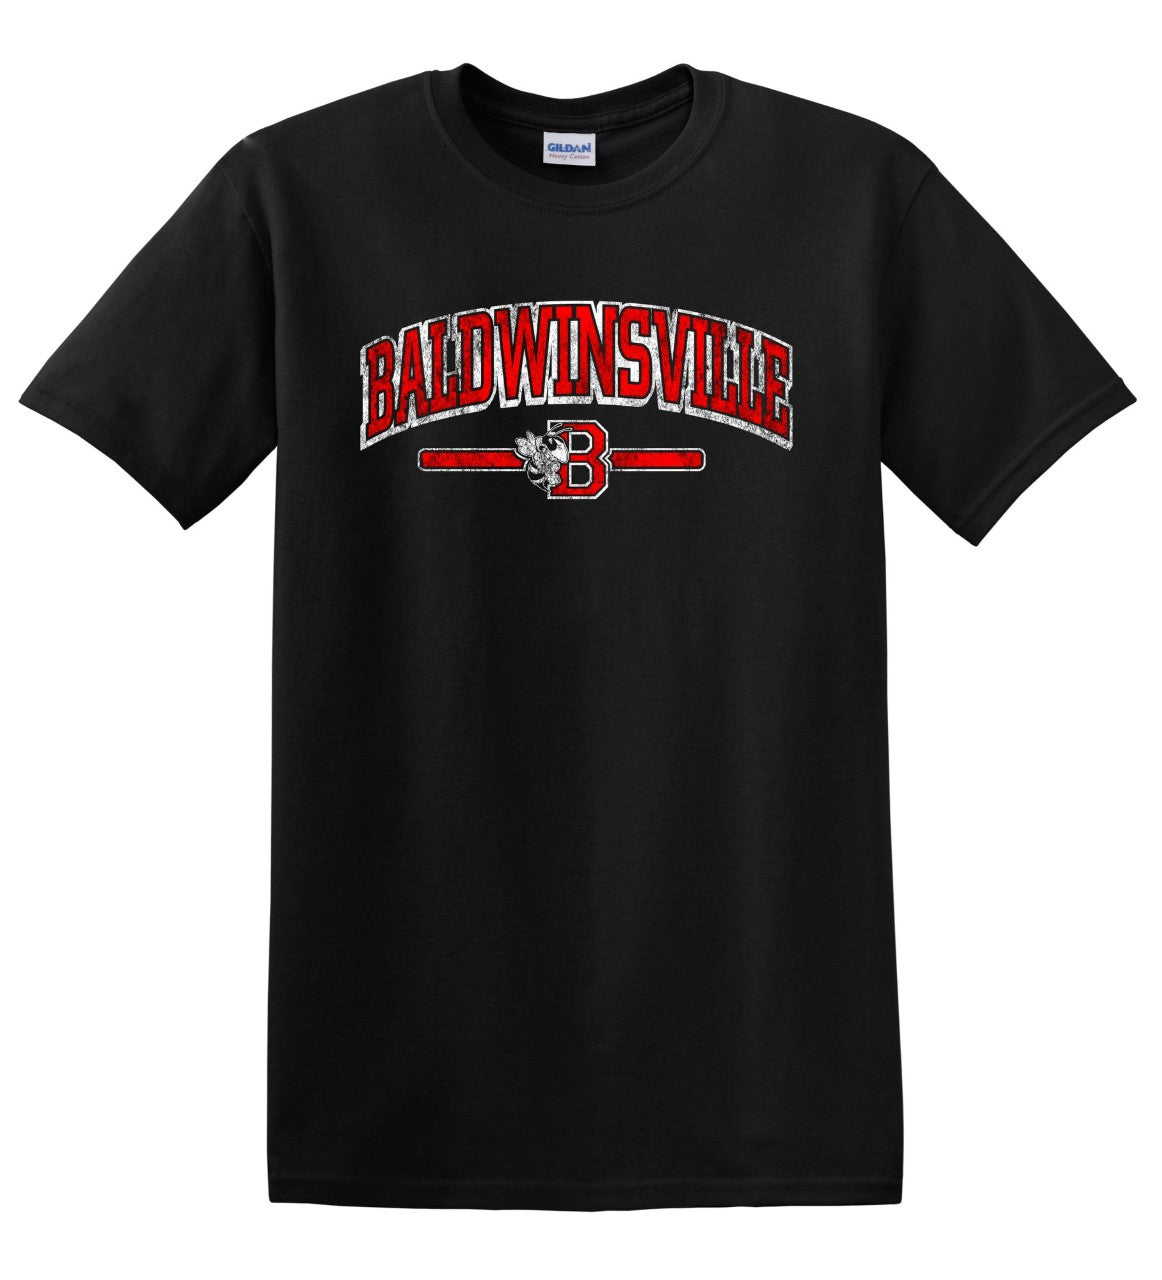 "Baldwinsville" Distressed Logo Black T-shirt